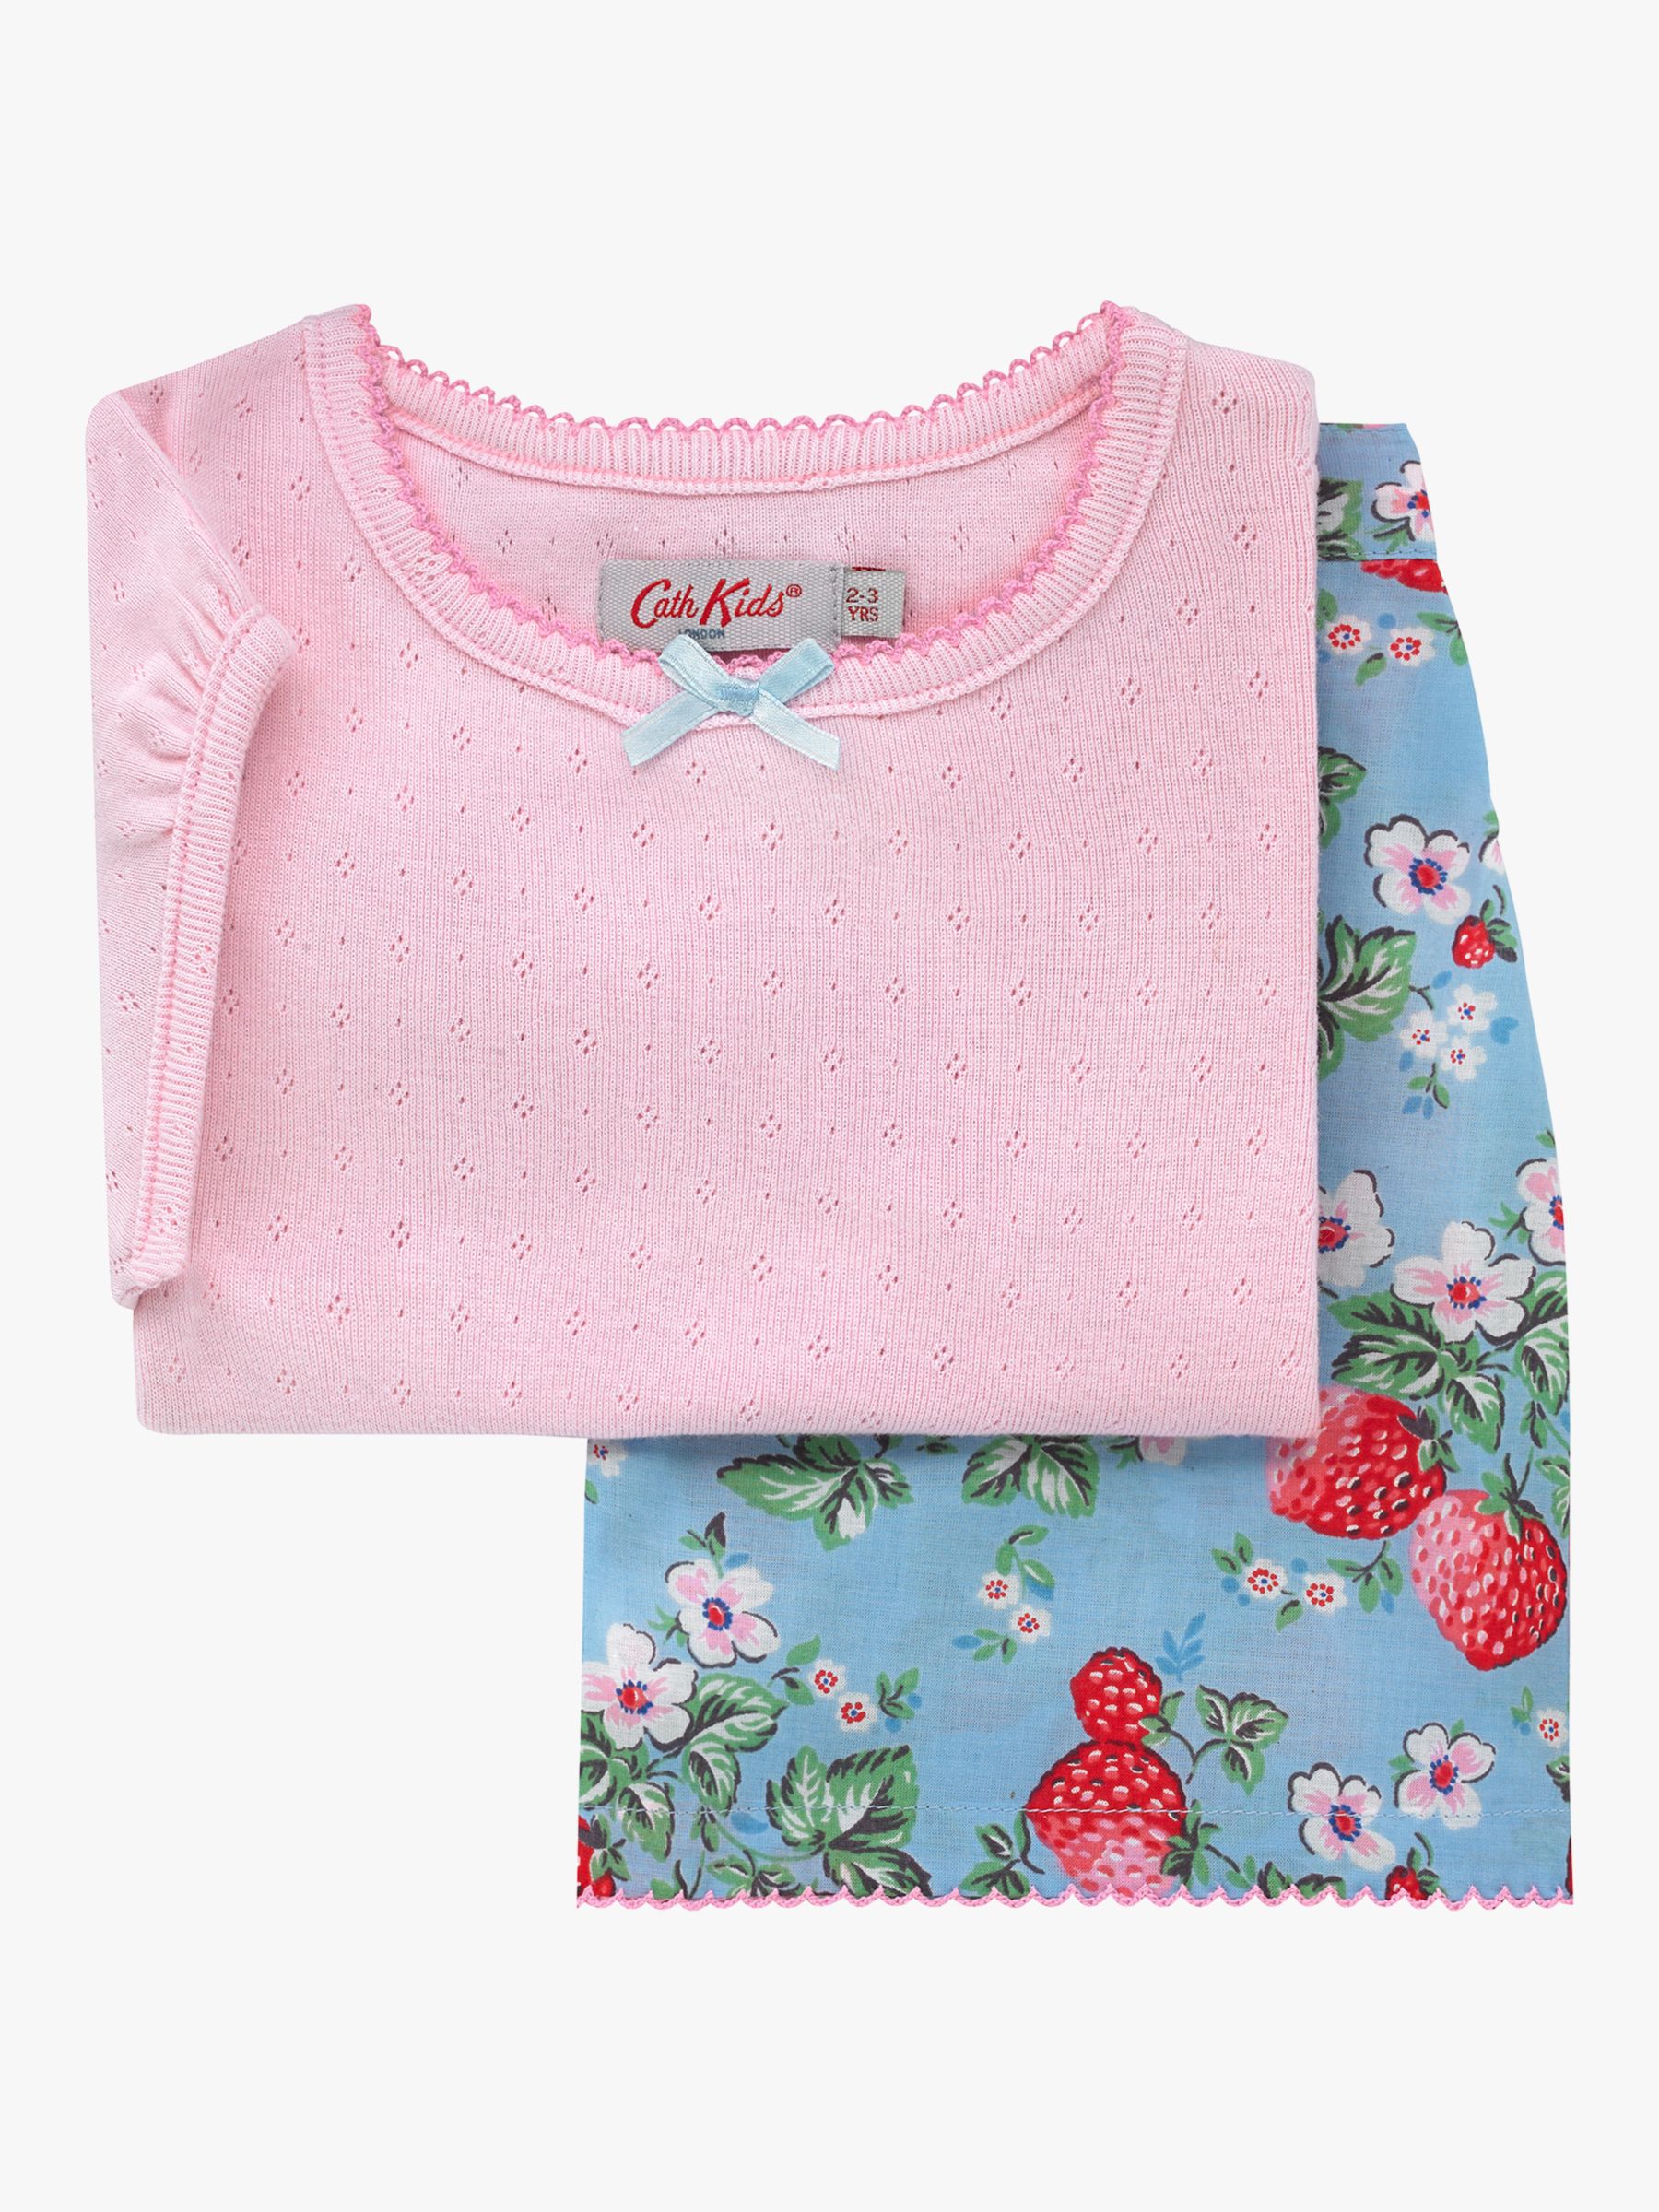 strawberry print adidas hoodie